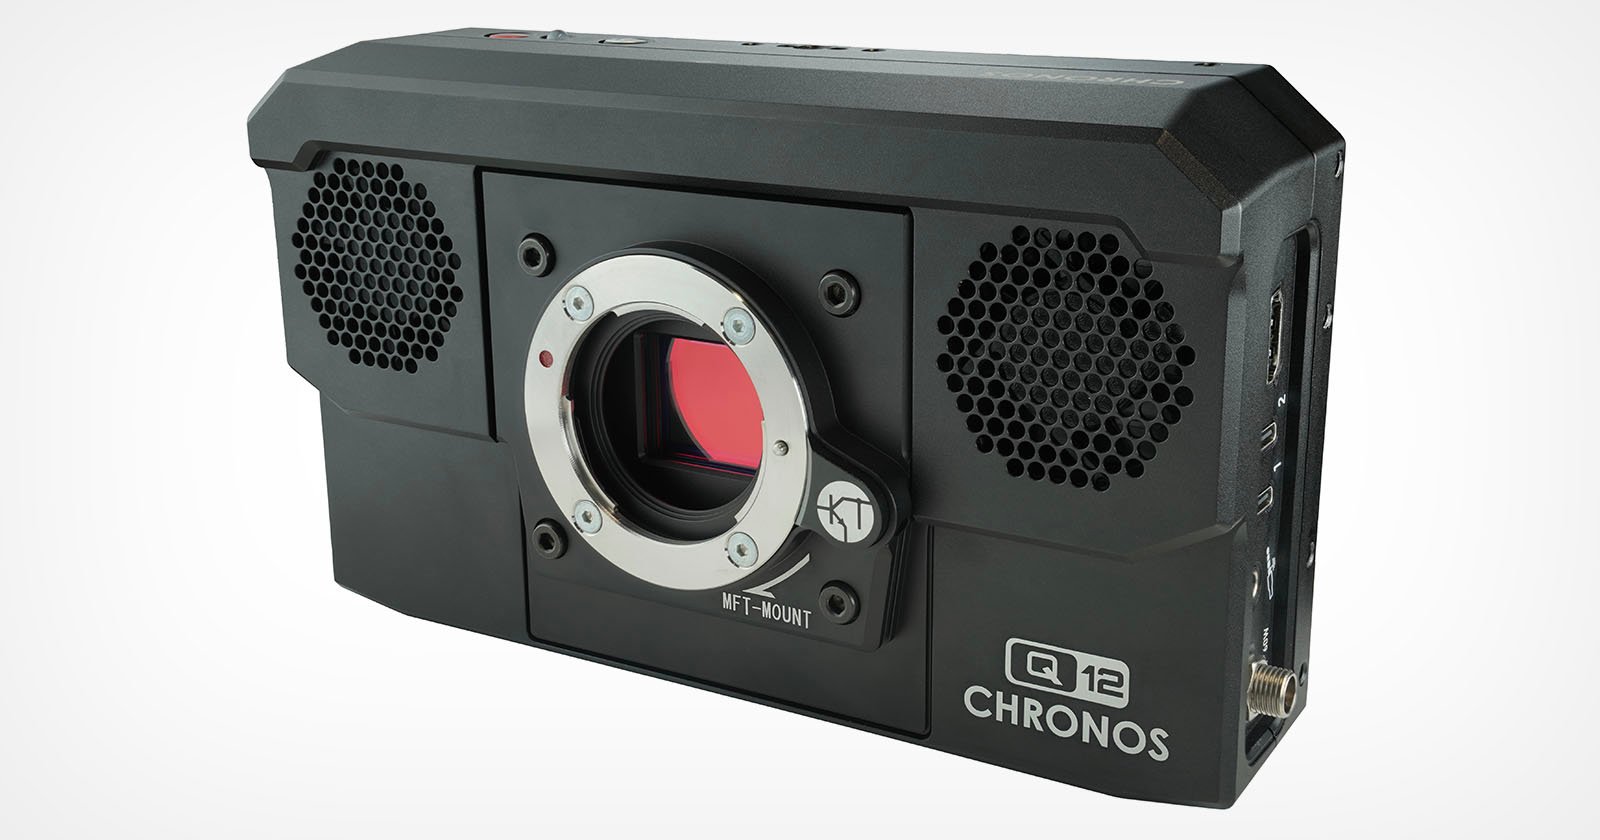  affordable chronos 4k12 q12 shoot 